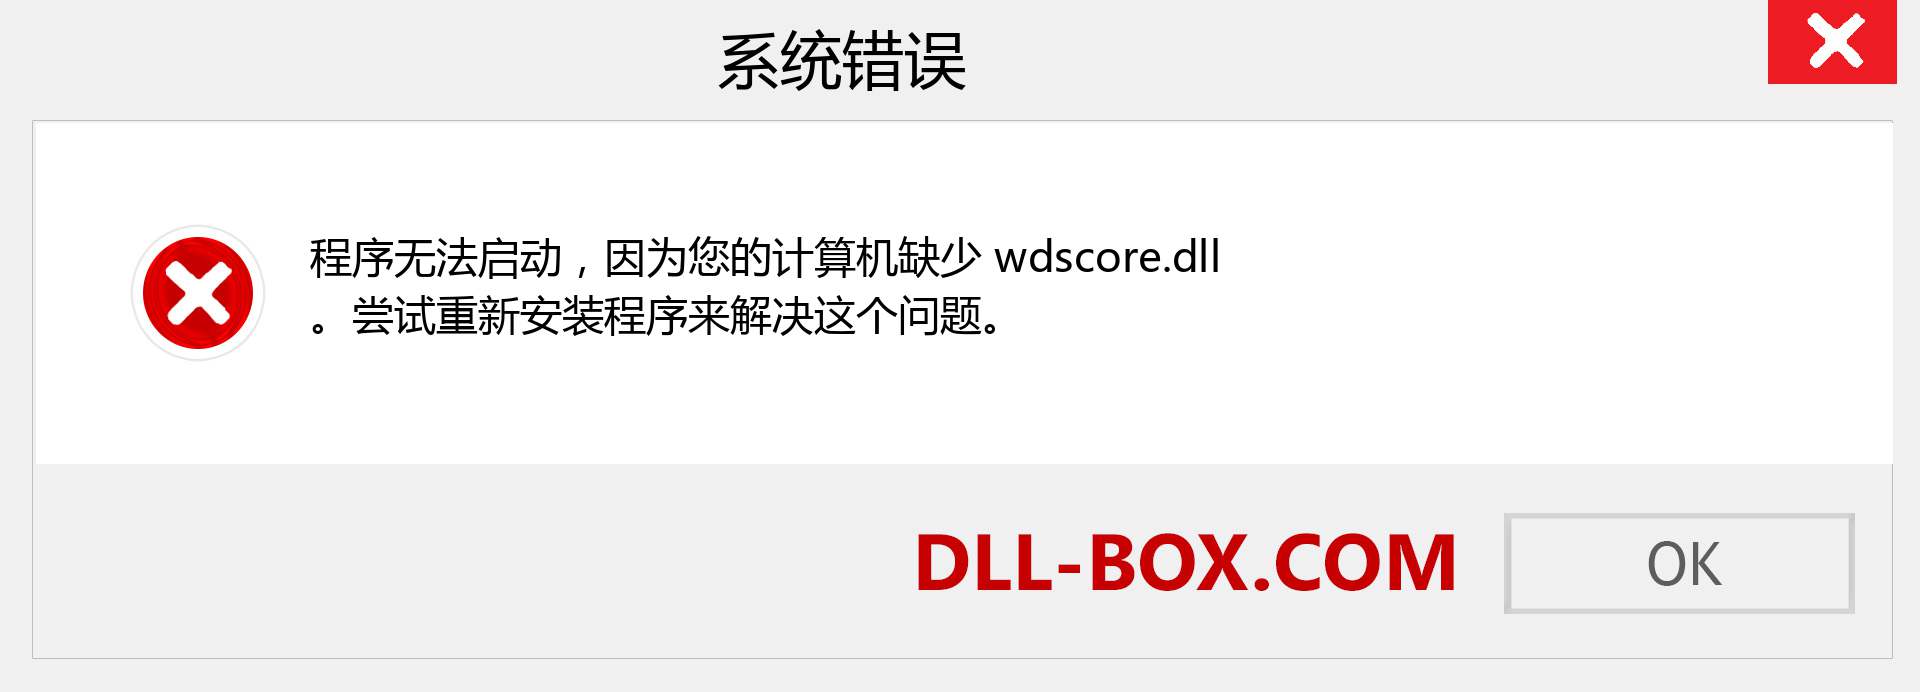 wdscore.dll 文件丢失？。 适用于 Windows 7、8、10 的下载 - 修复 Windows、照片、图像上的 wdscore dll 丢失错误